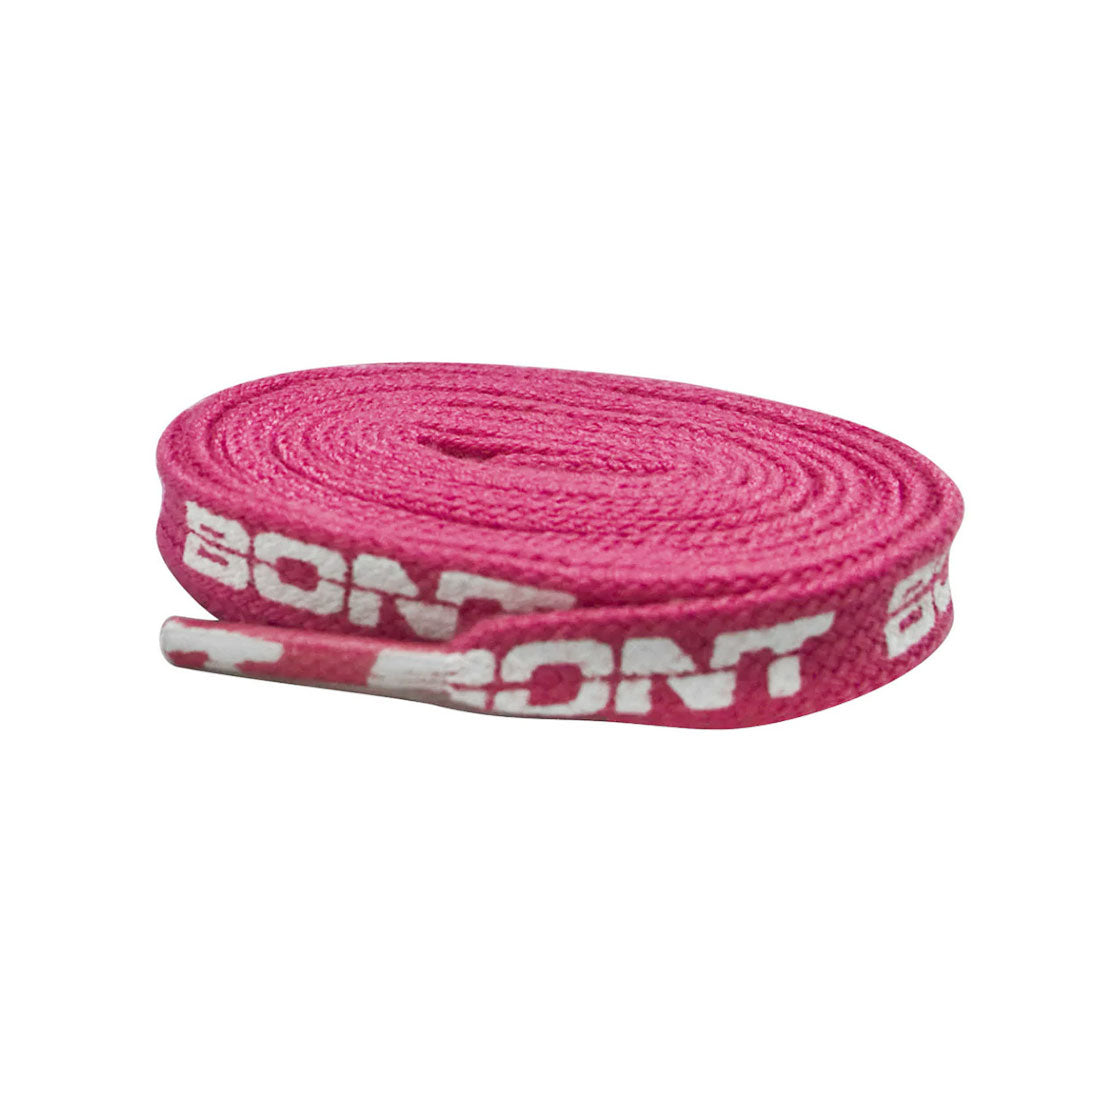 BONT Skate 10mm Laces - 120cm / 47in - Pink Laces